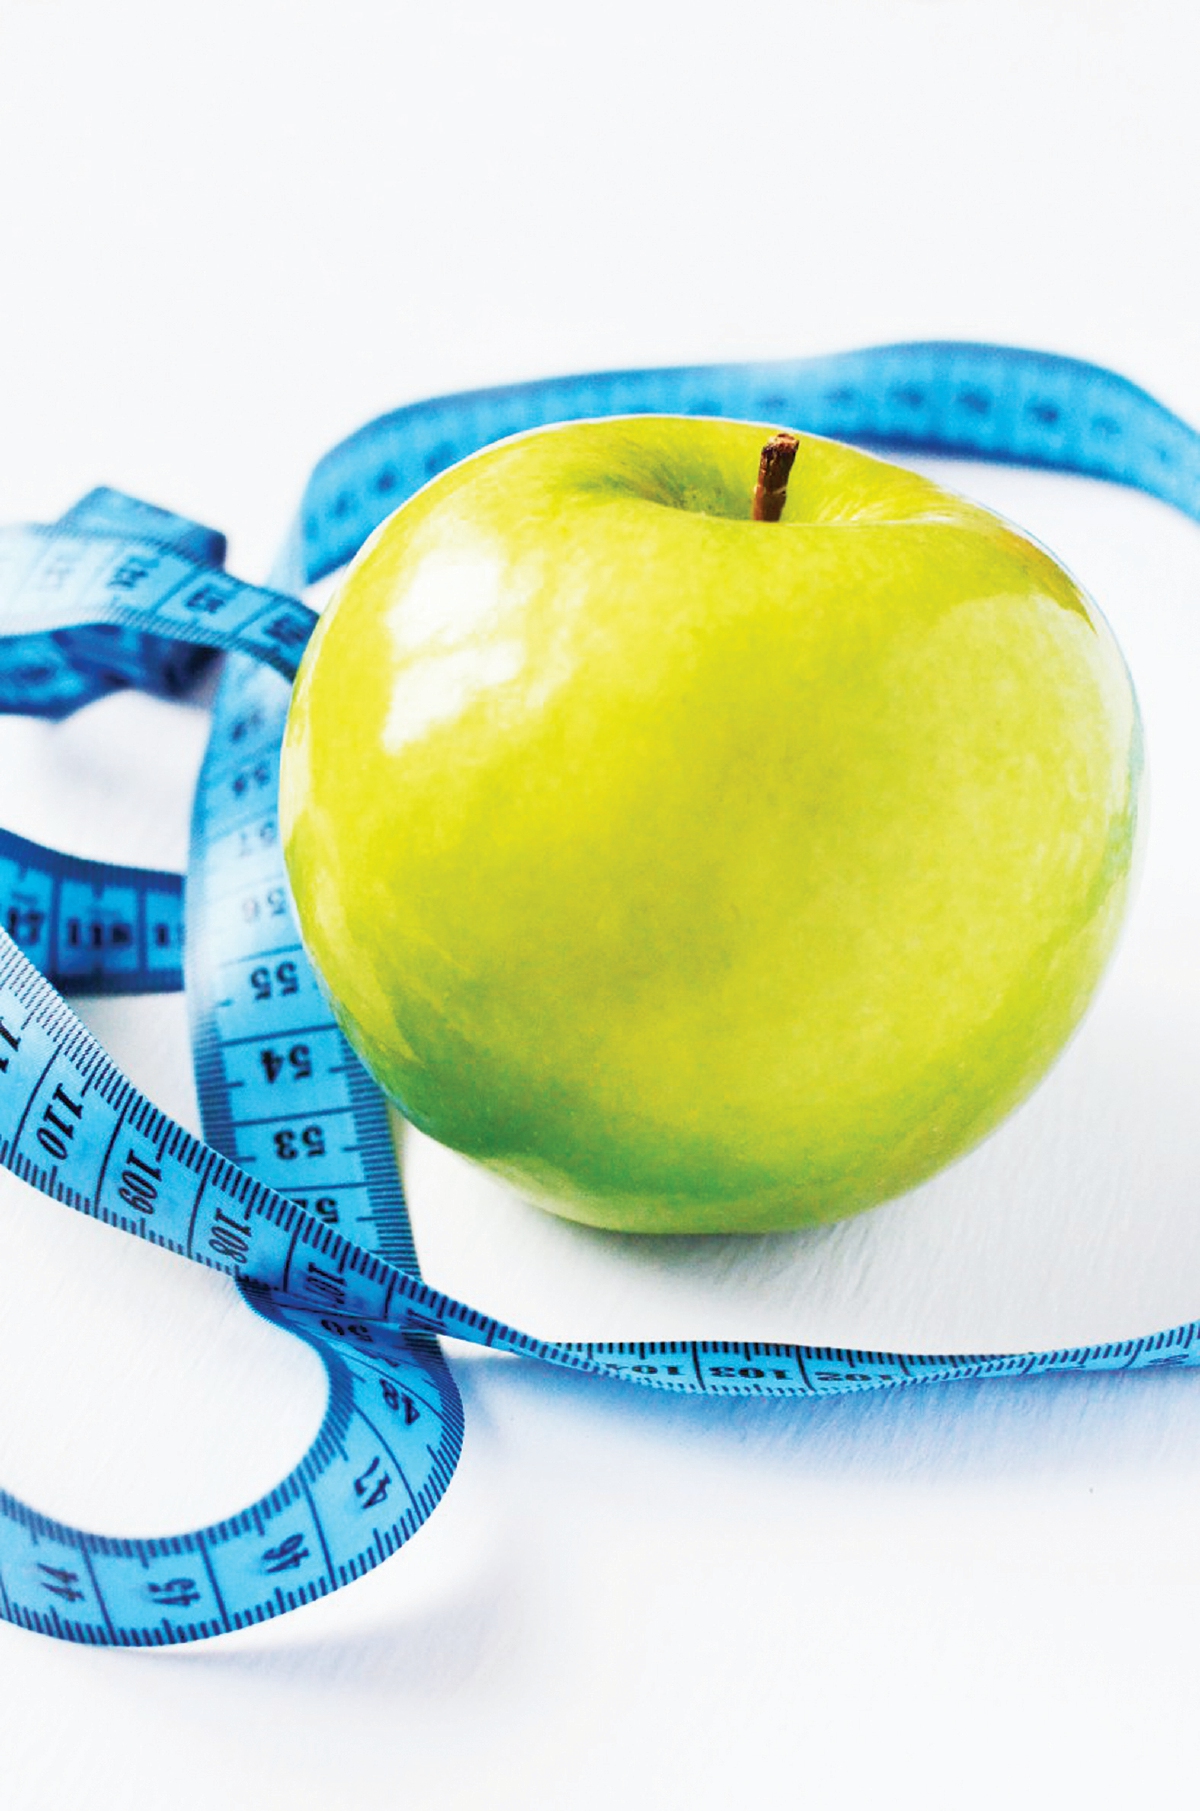 PEMAKANAN sihat menjadi kunci dalam diet.  - FOTO Google